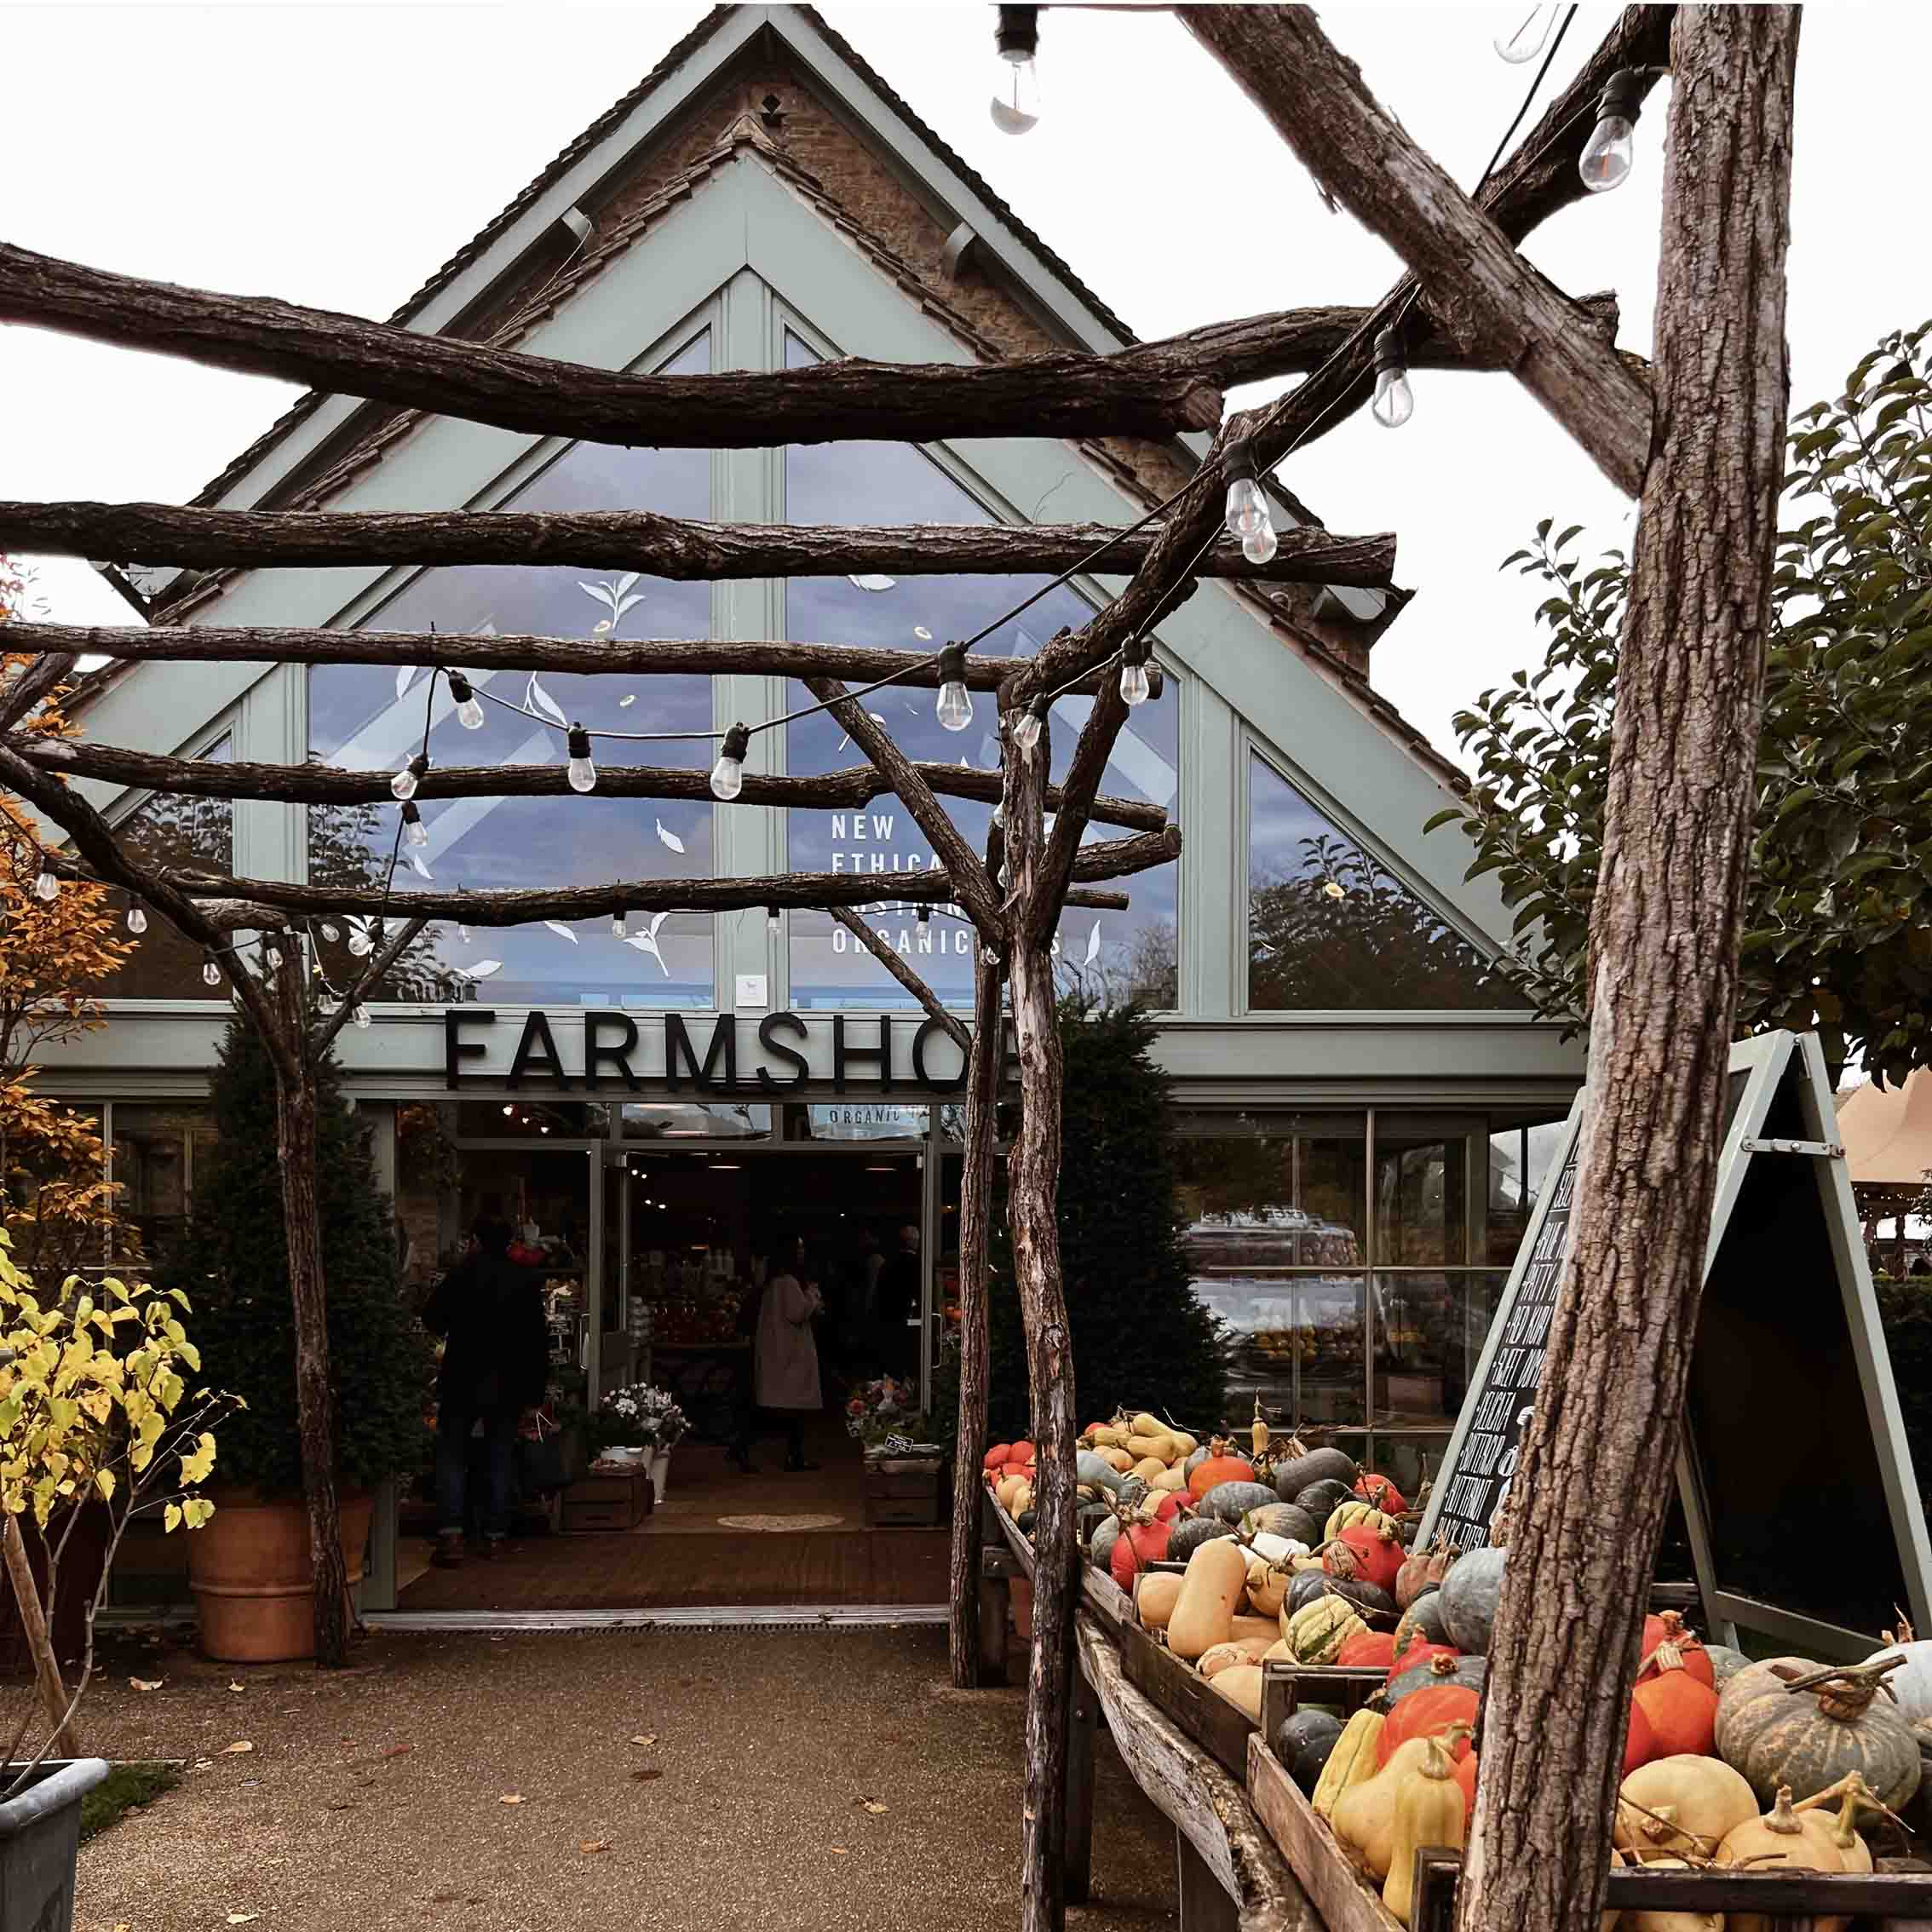 Daylesford Organic Farmshop with pumpkins outside